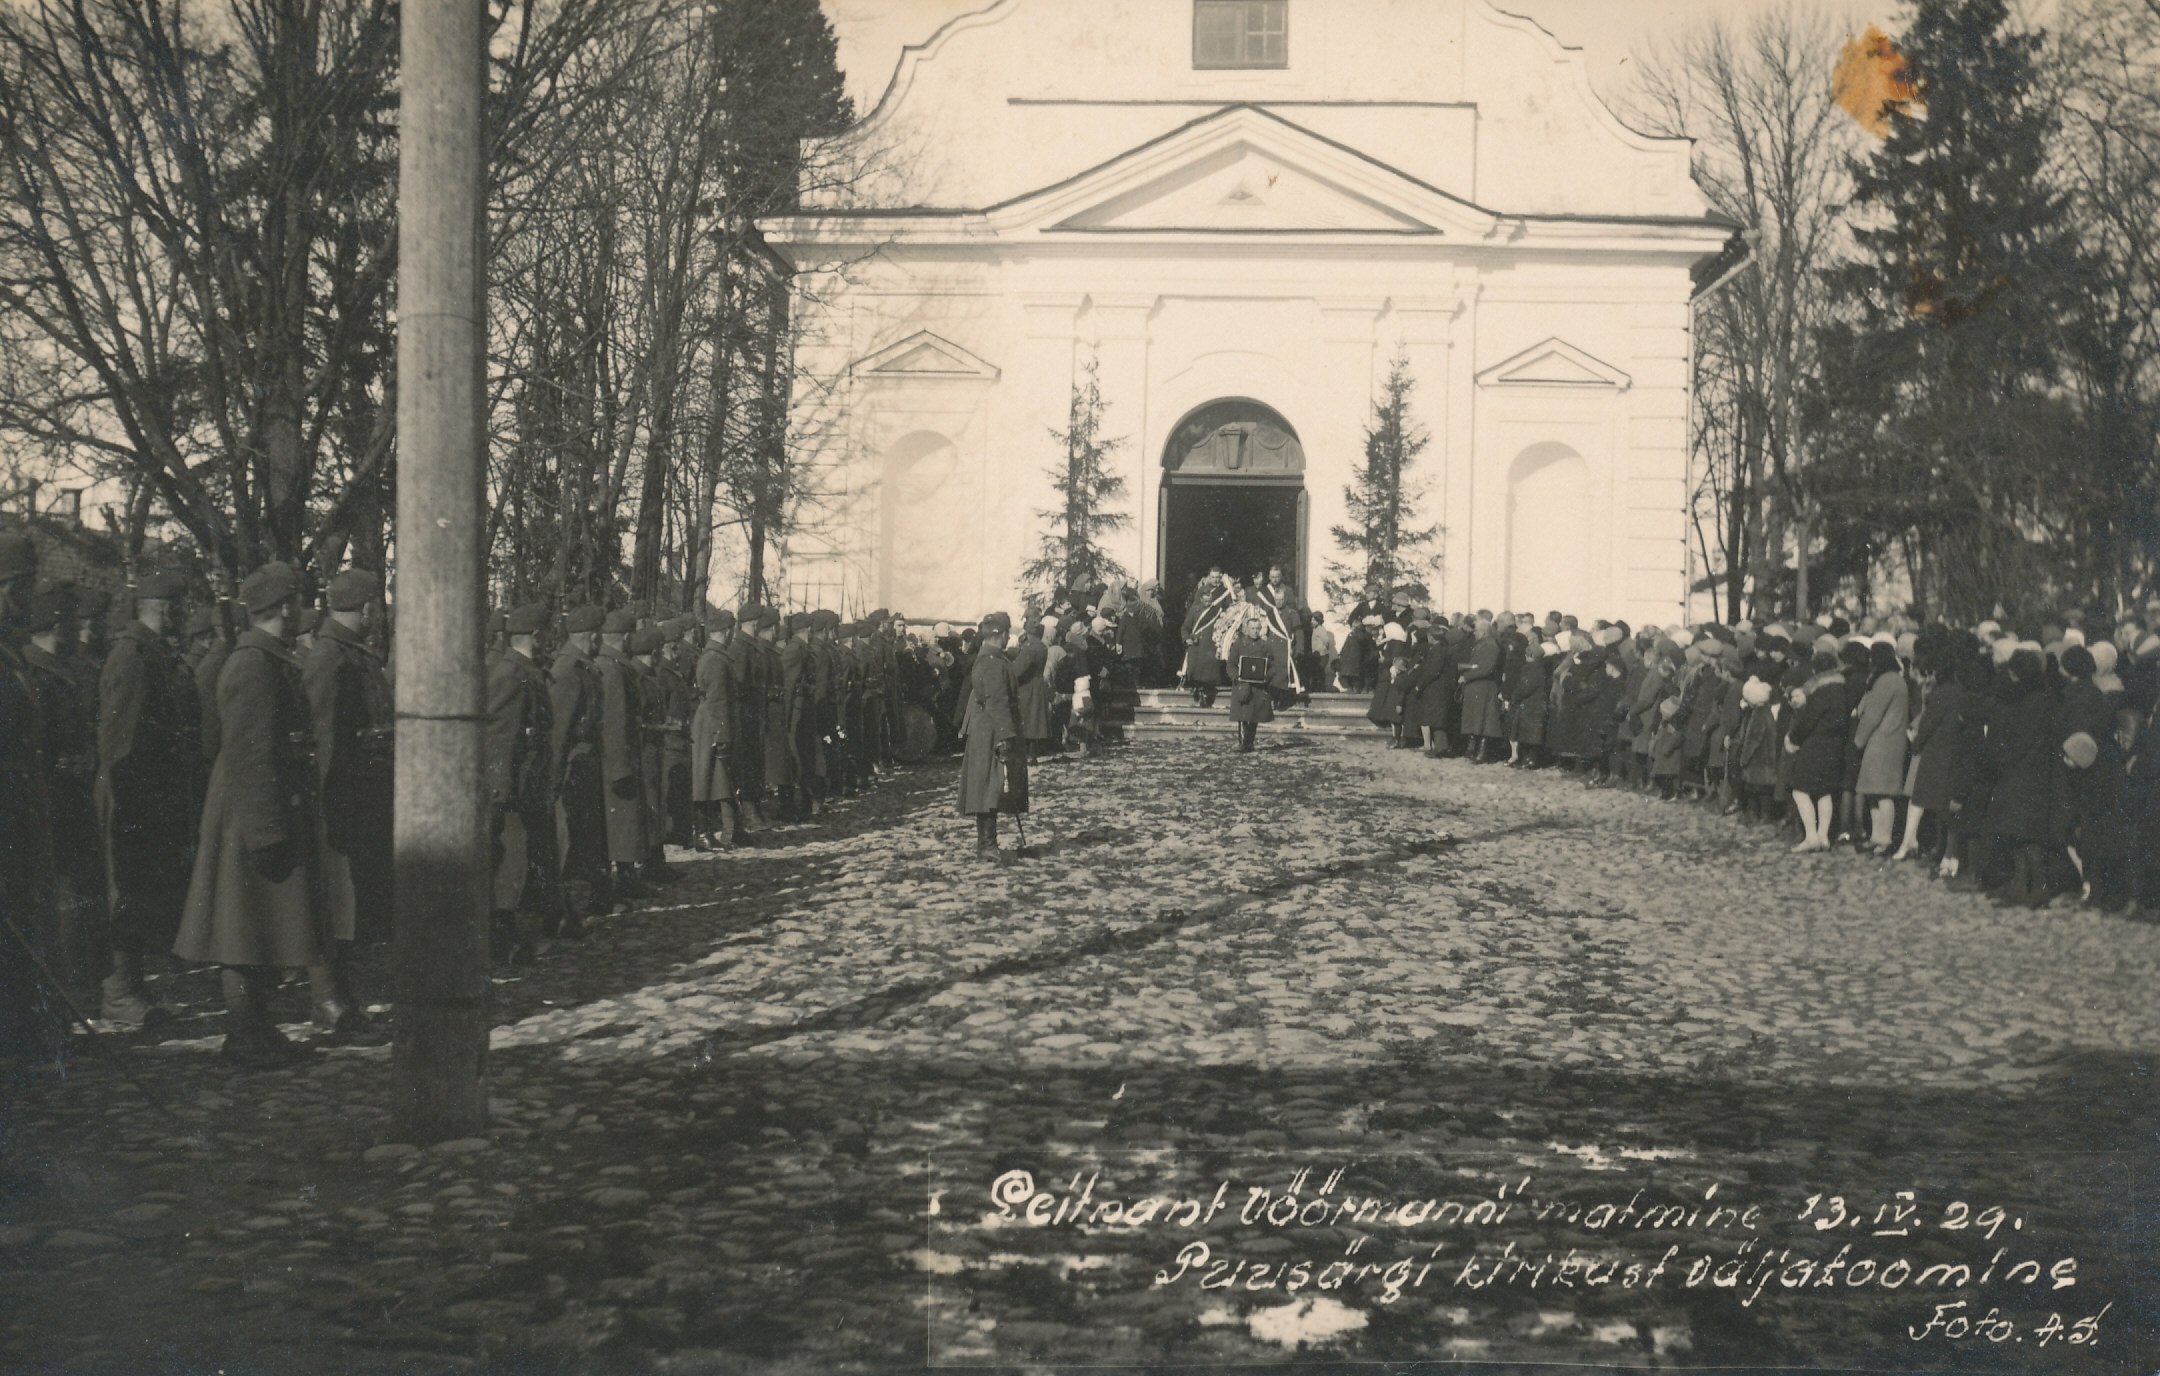 Foto. Leitnant Vöörmanni matmine 13.aprillil 1929.a.